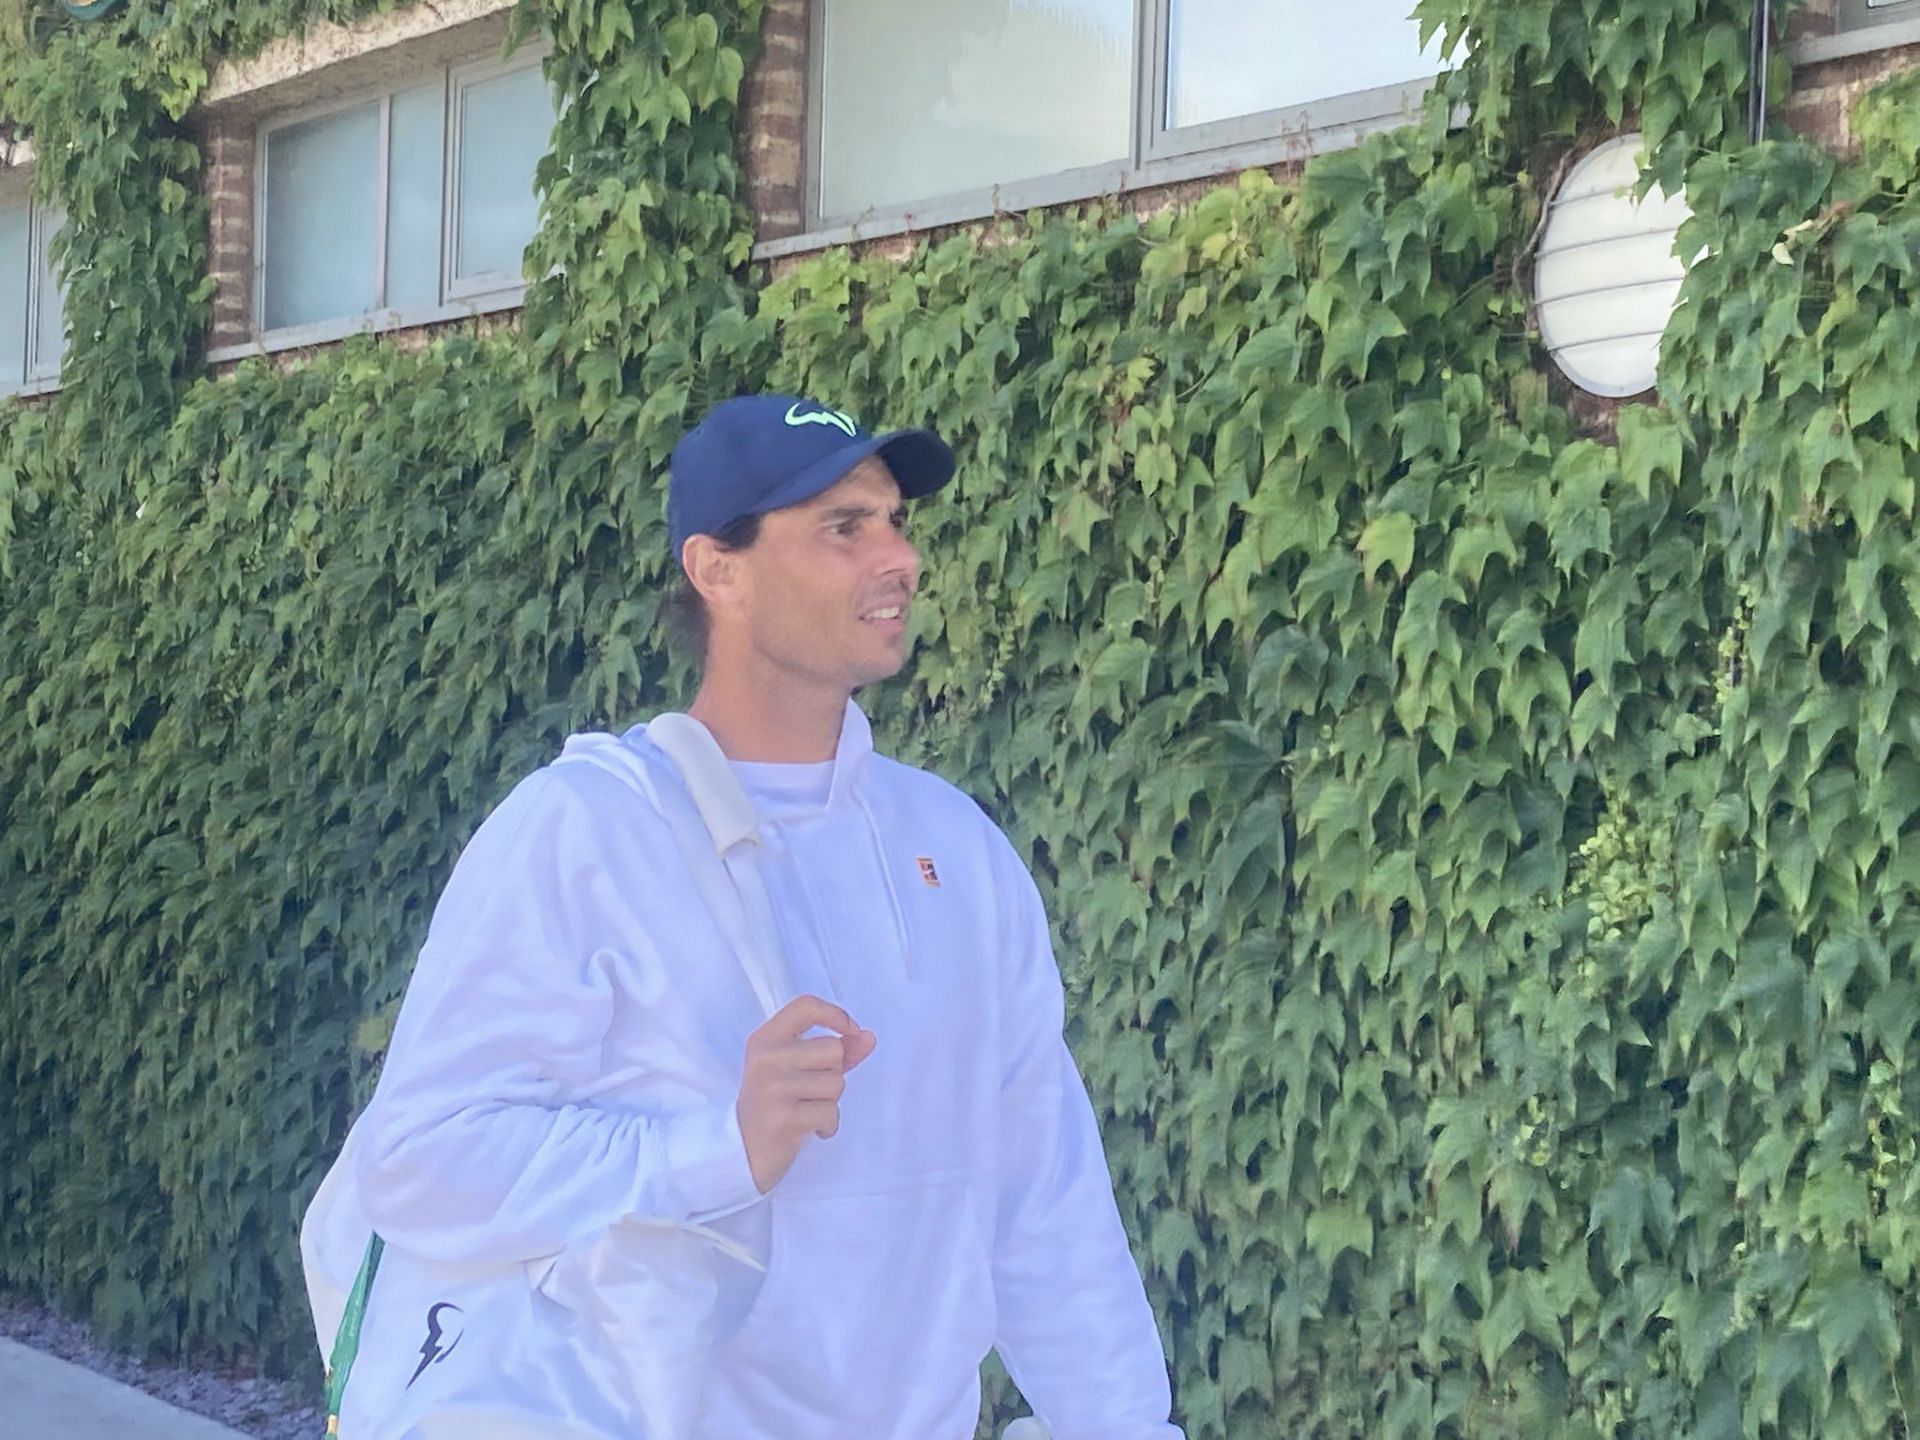 Rafael Nadal arrives at Wimbledon after landing in London on Monday